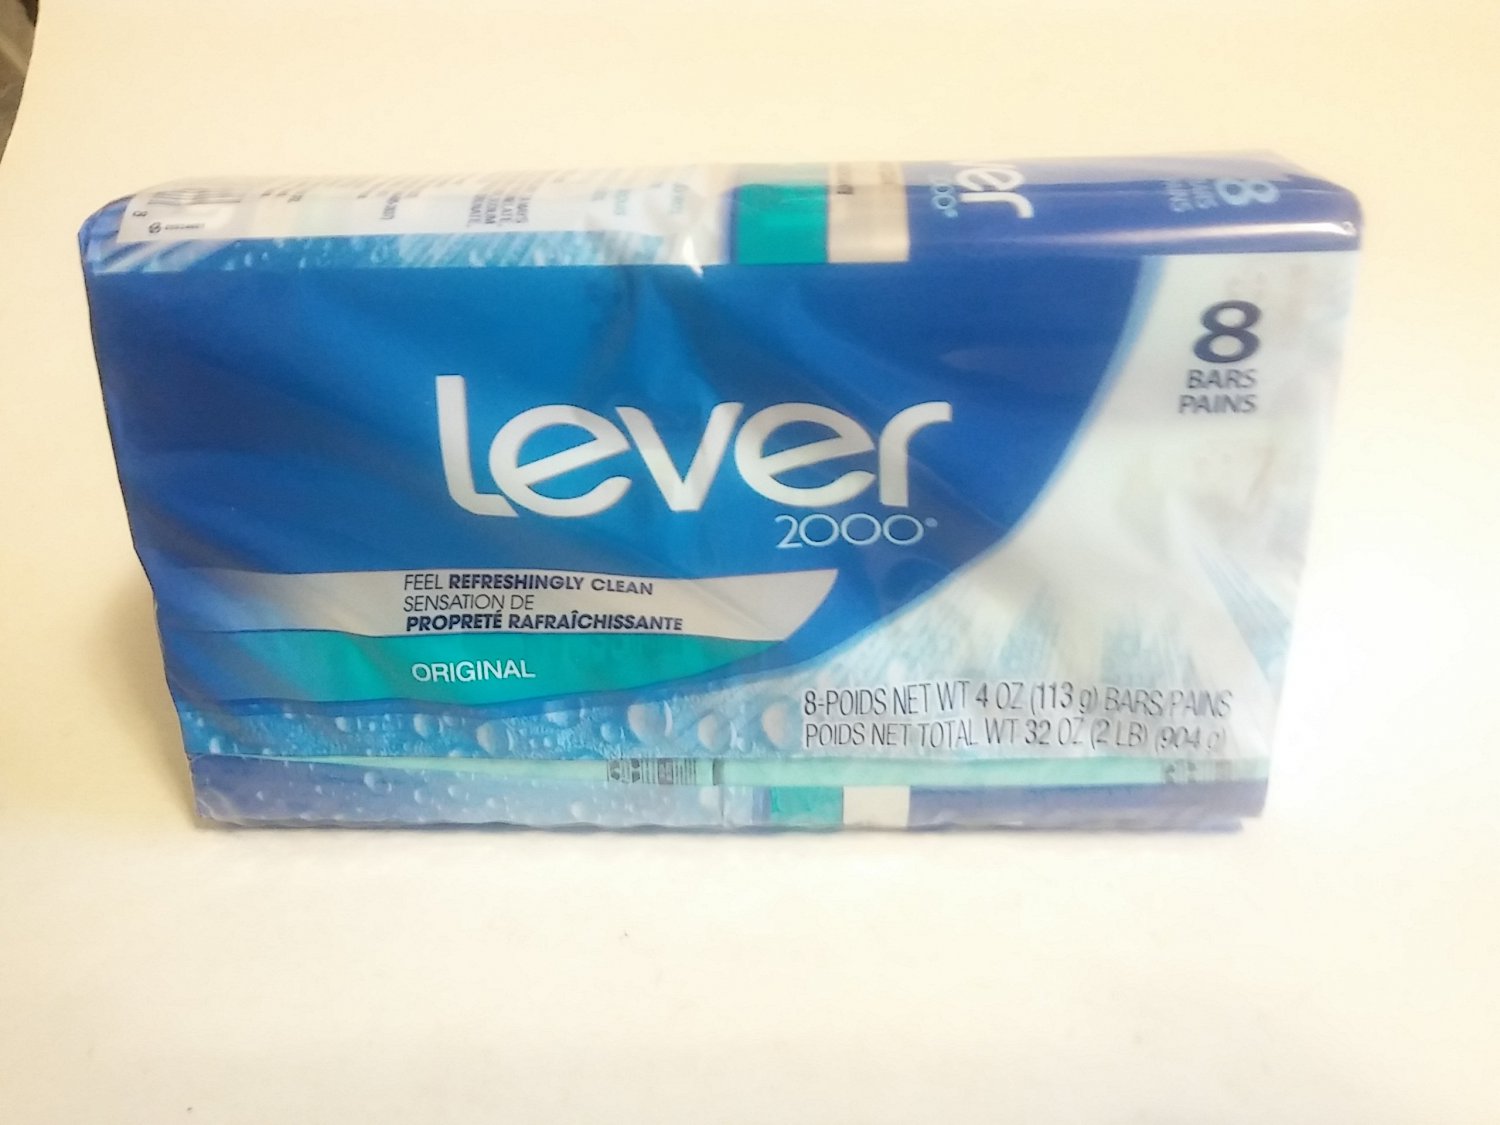 Lever 2000 Bar Soap Original, 4 oz (8 count)